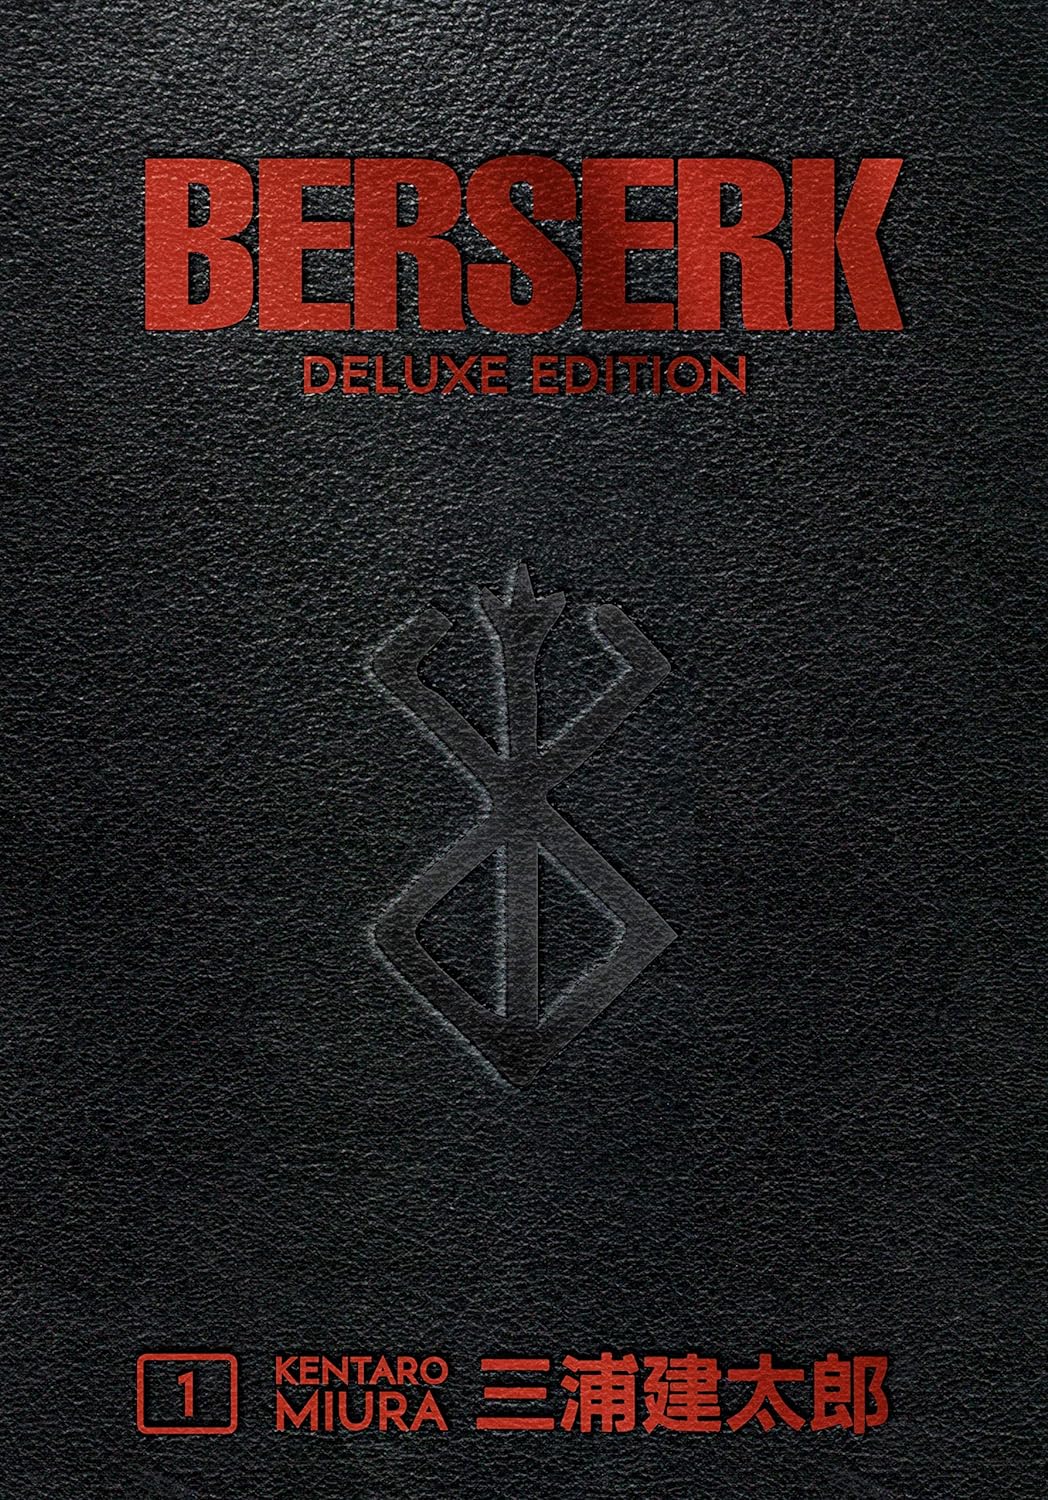 Cover image of the Manga Berserk-Deluxe-Volume-1